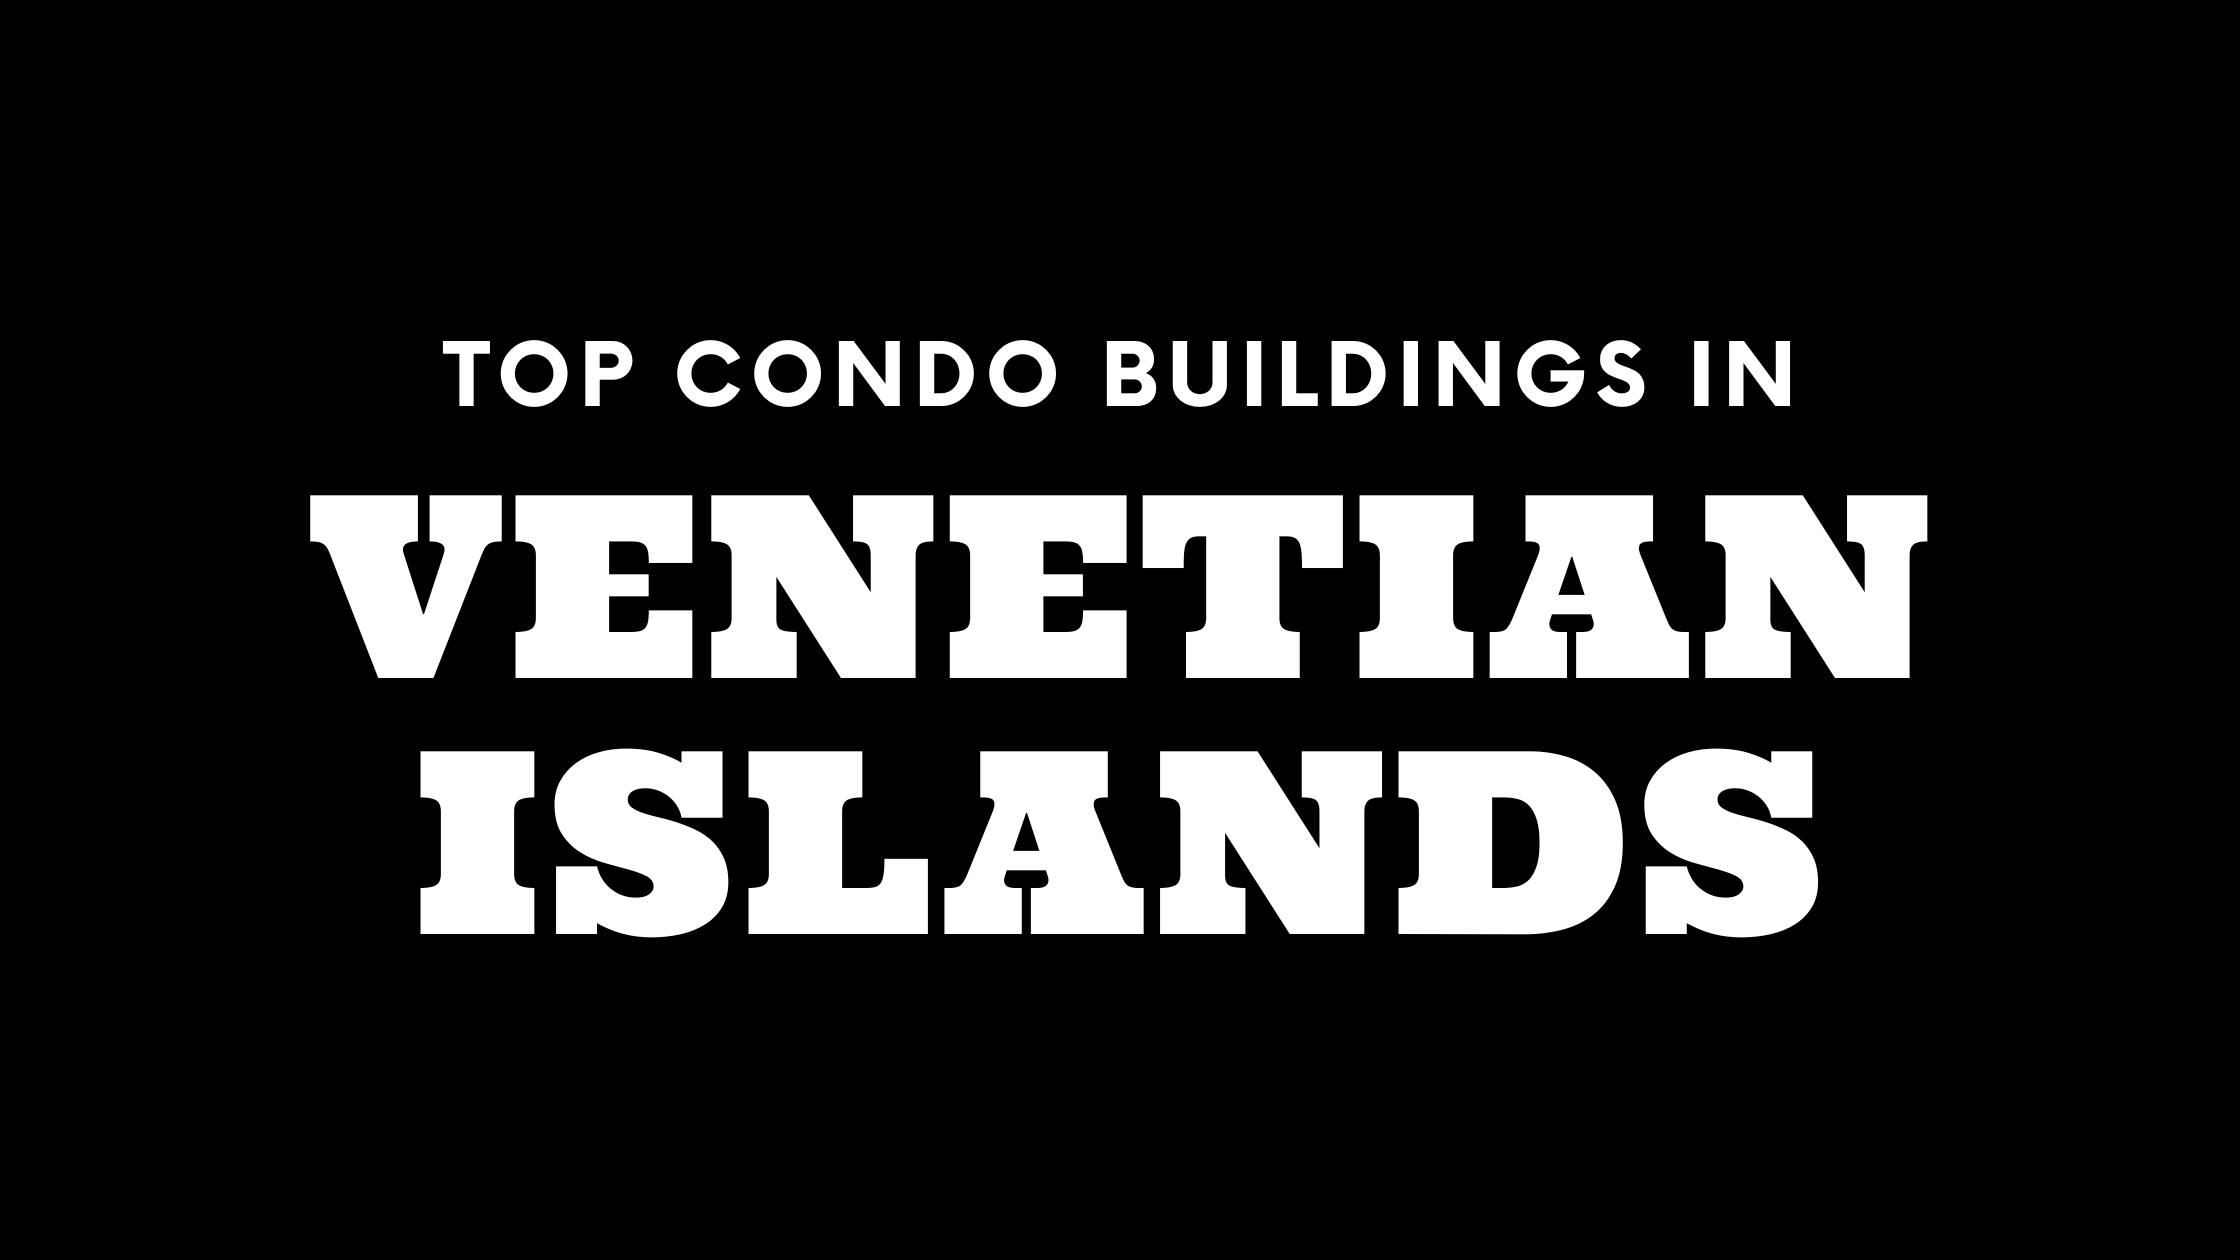 Top Condo Buildings in the Venetian Islands